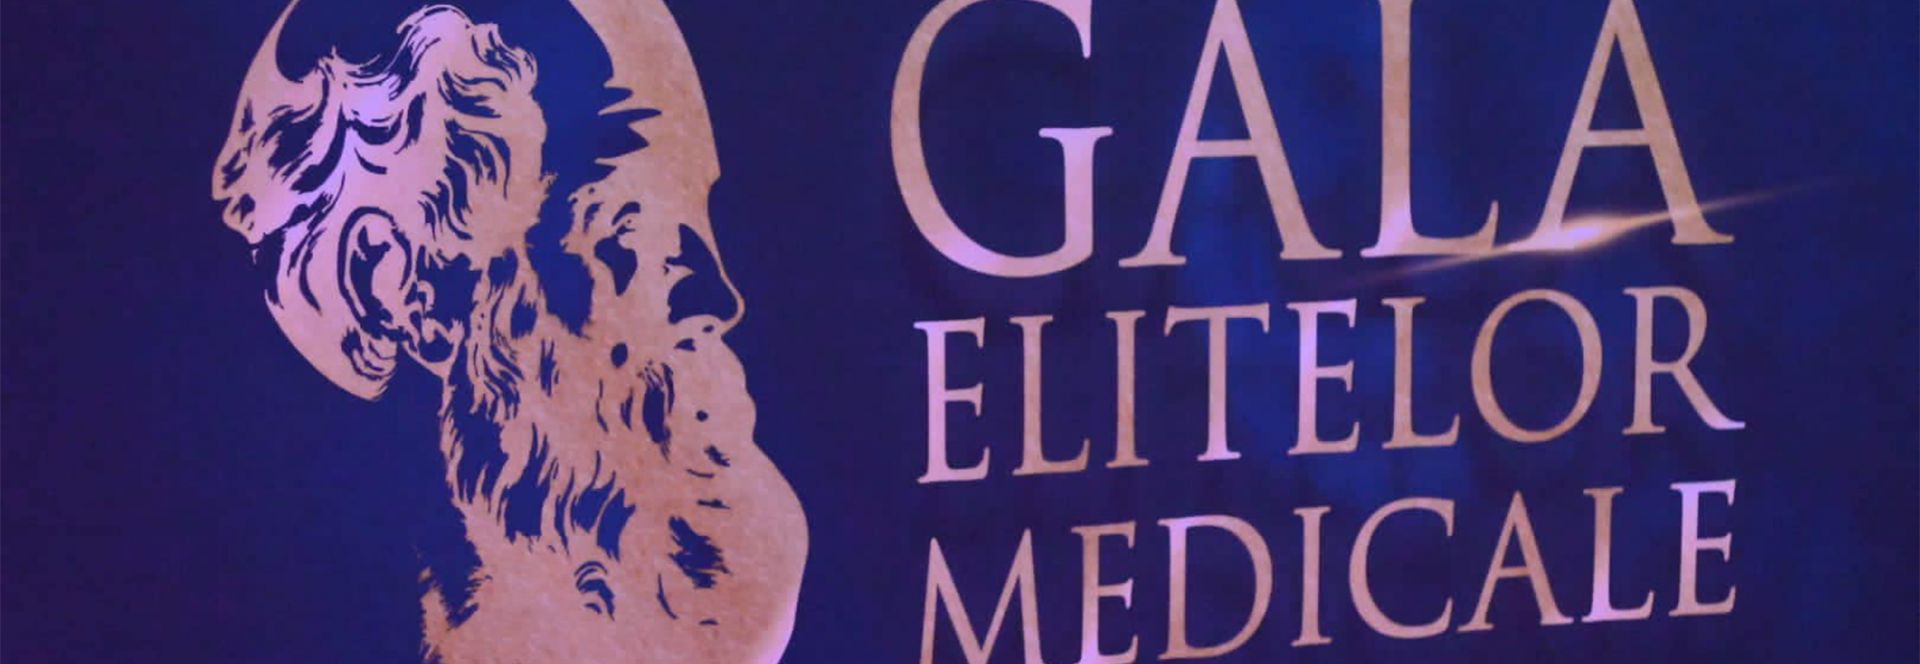 Gala Elitelor Medicale